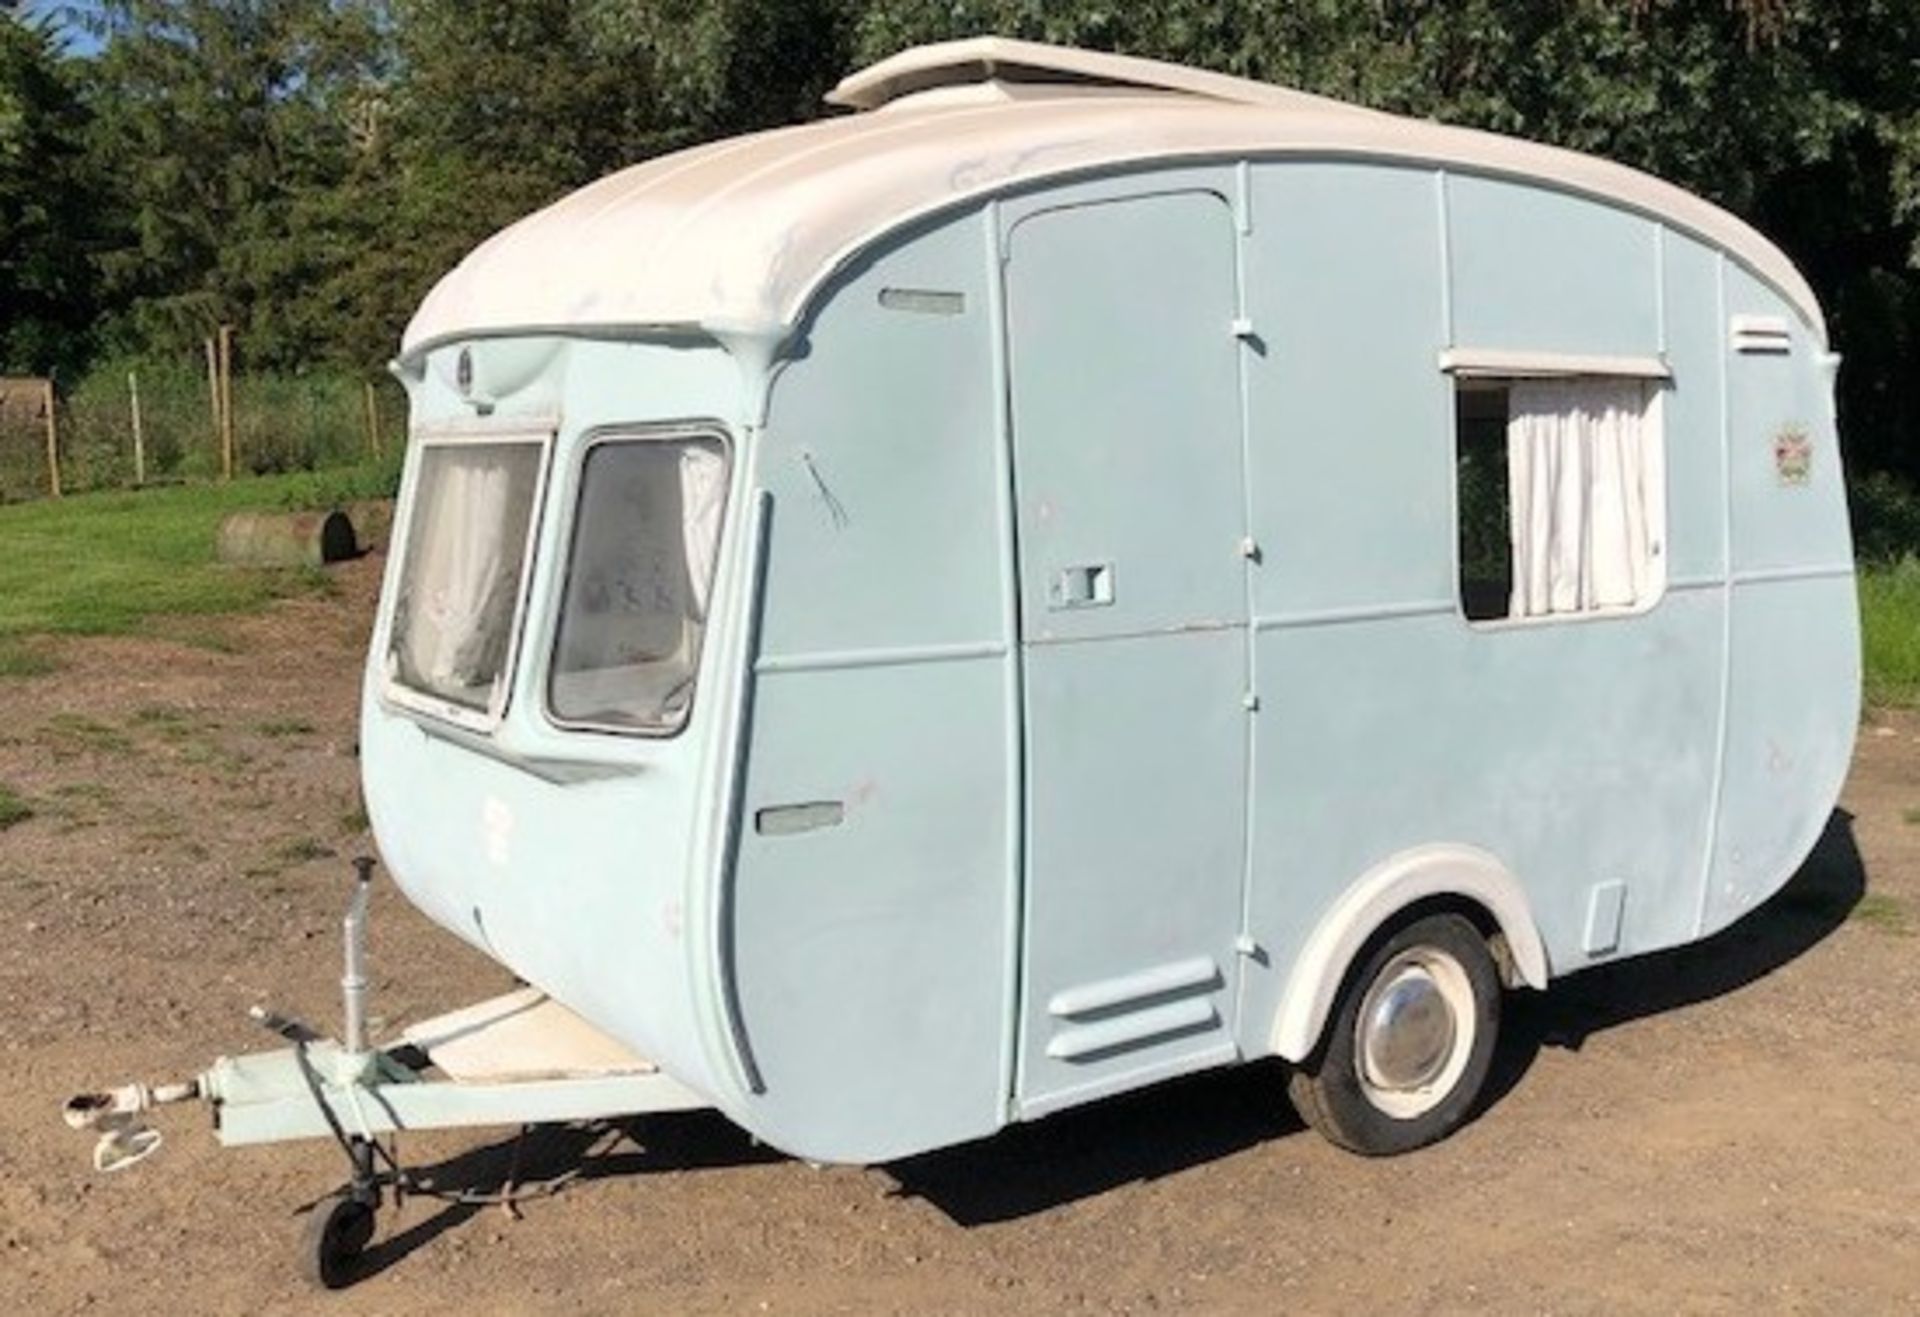 Cheltenham Classic 2-Berth Caravan (1970) “Lucy” (IMPORTANT NOTE: The caravan has no lights so